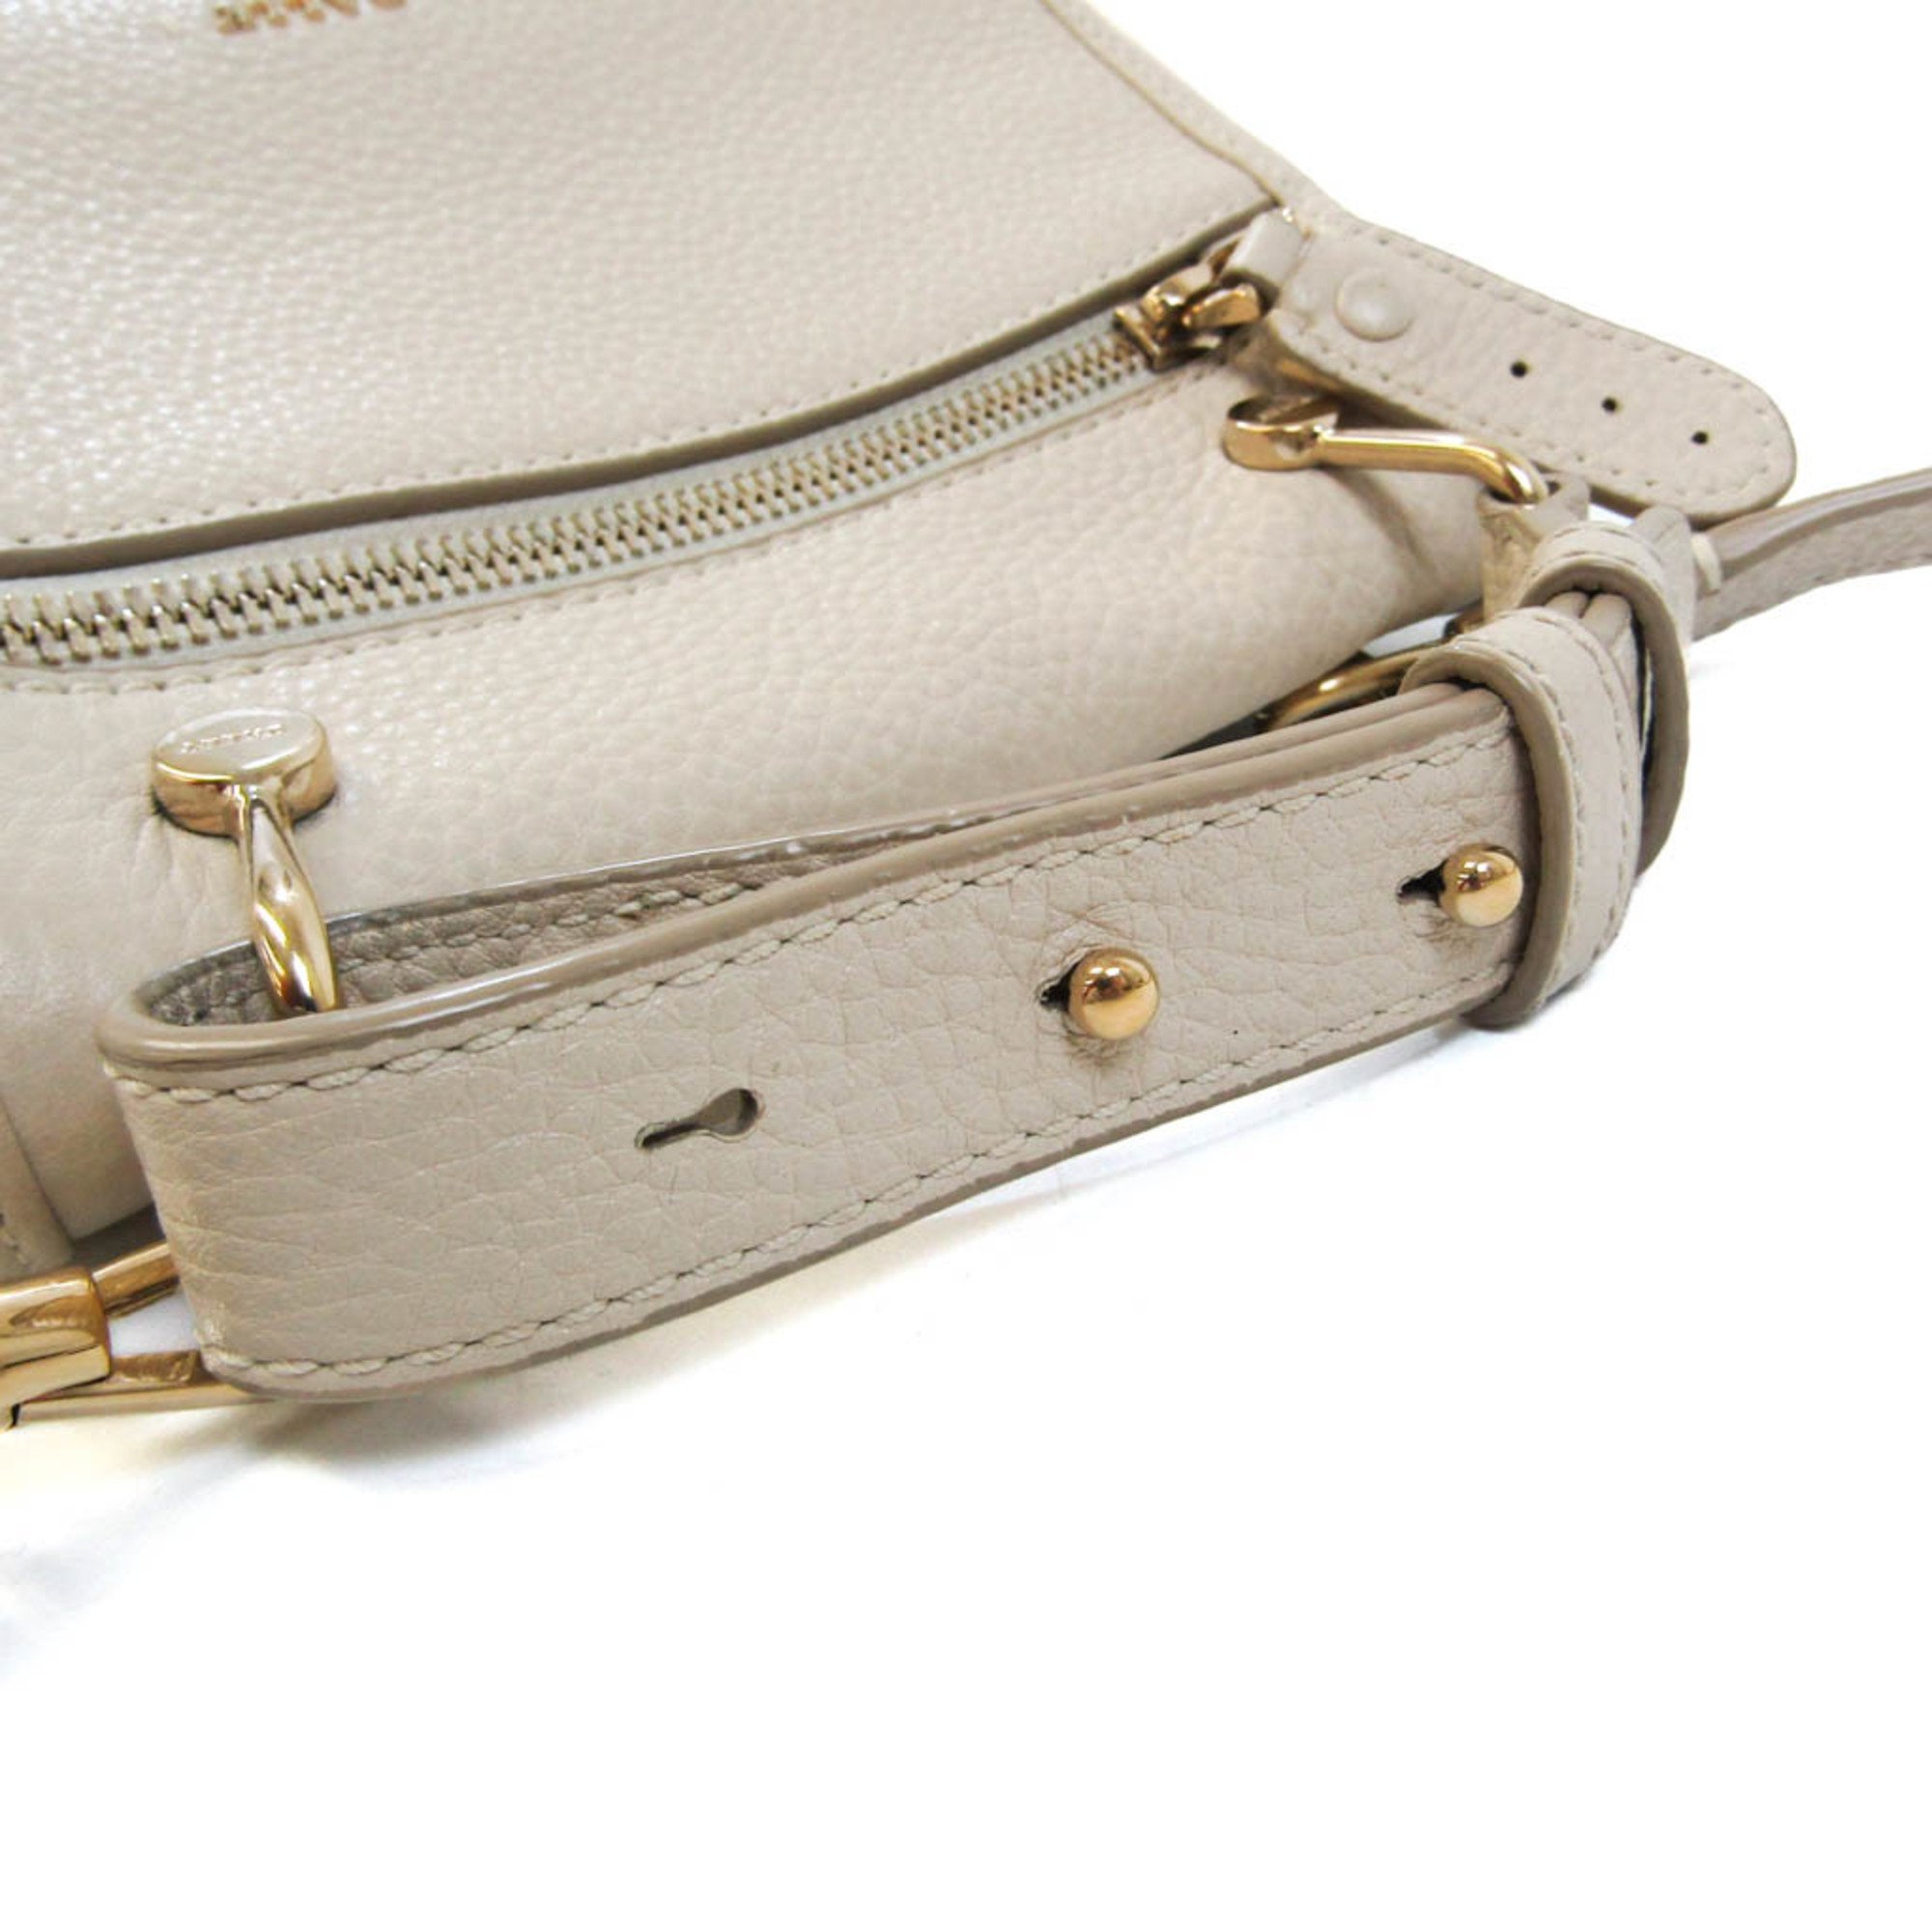 Bally BLOOM XS Women's Leather Handbag,Shoulder Bag Cream